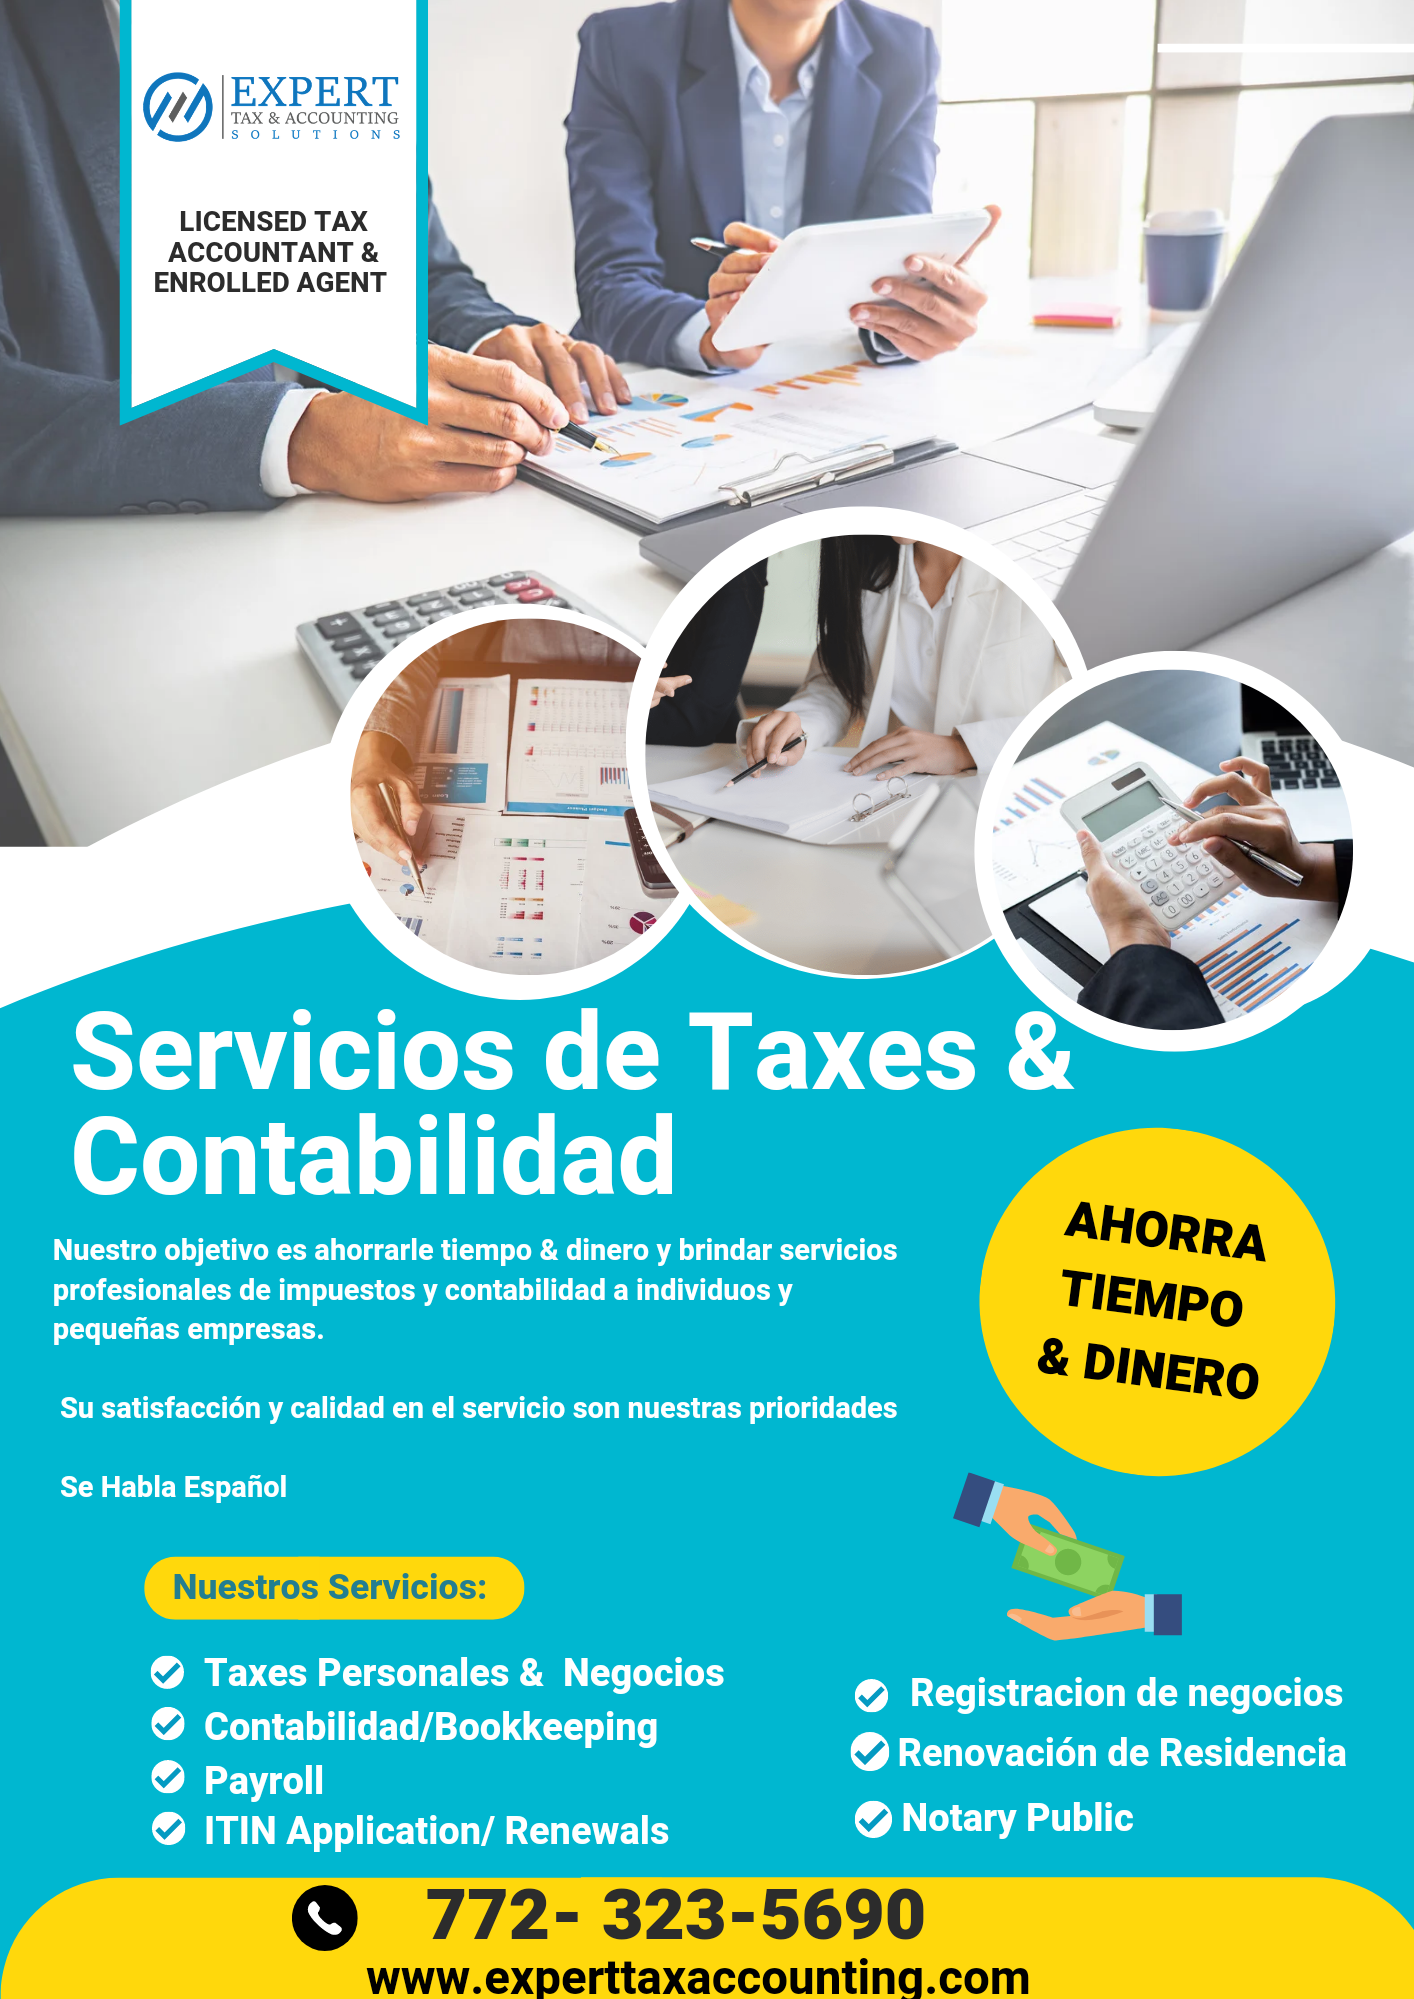 Expert Tax & Accounting Solutions, LLC